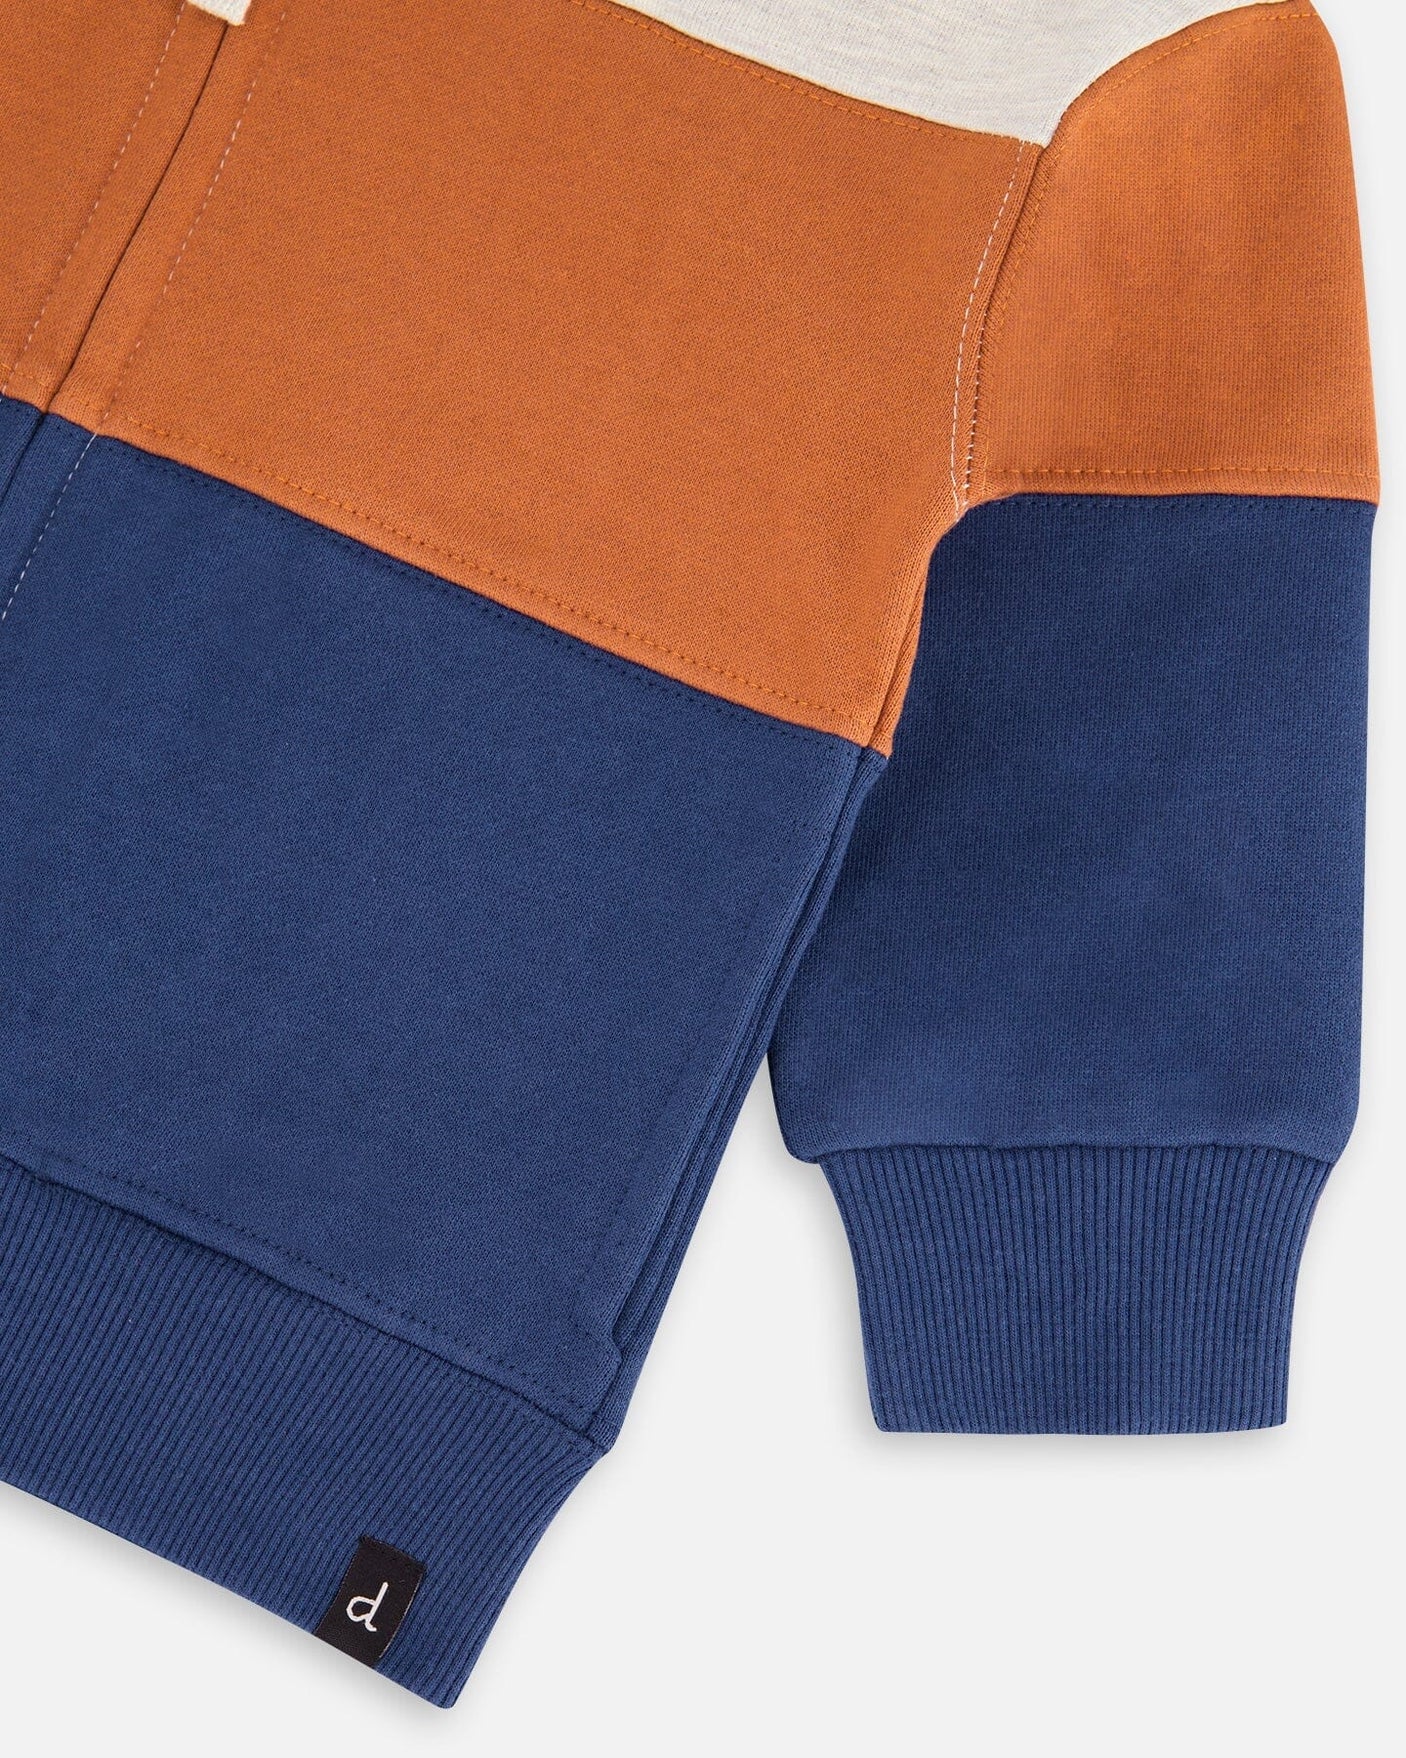 Full Zip Color Block Hooded Fleece Indigo Blue, Brown And Ivory Stripe-3